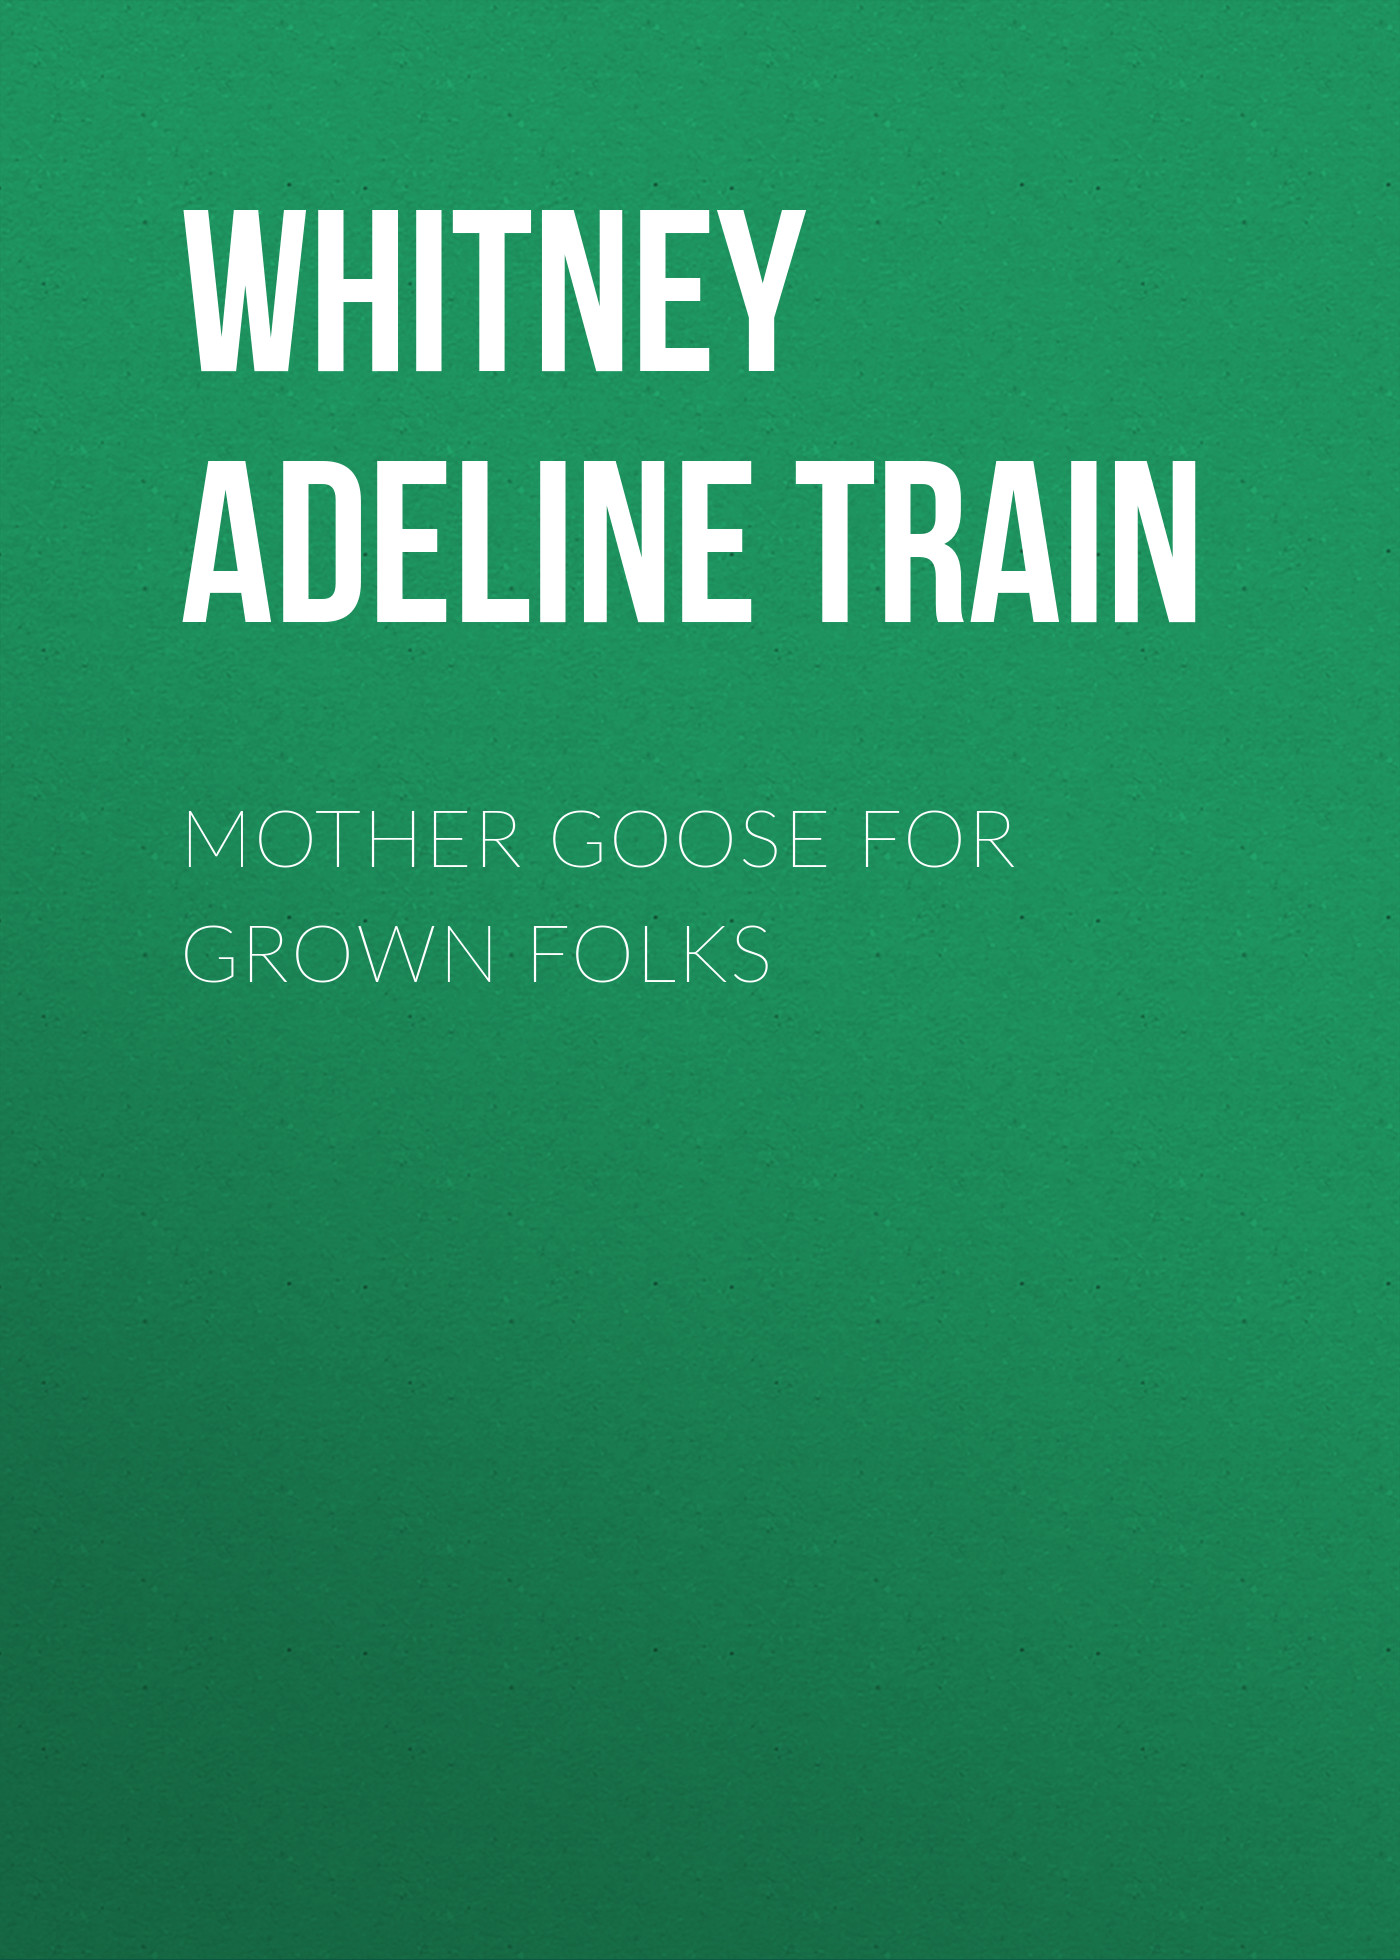 Whitney Adeline Dutton Train Mother Goose for Grown Folks